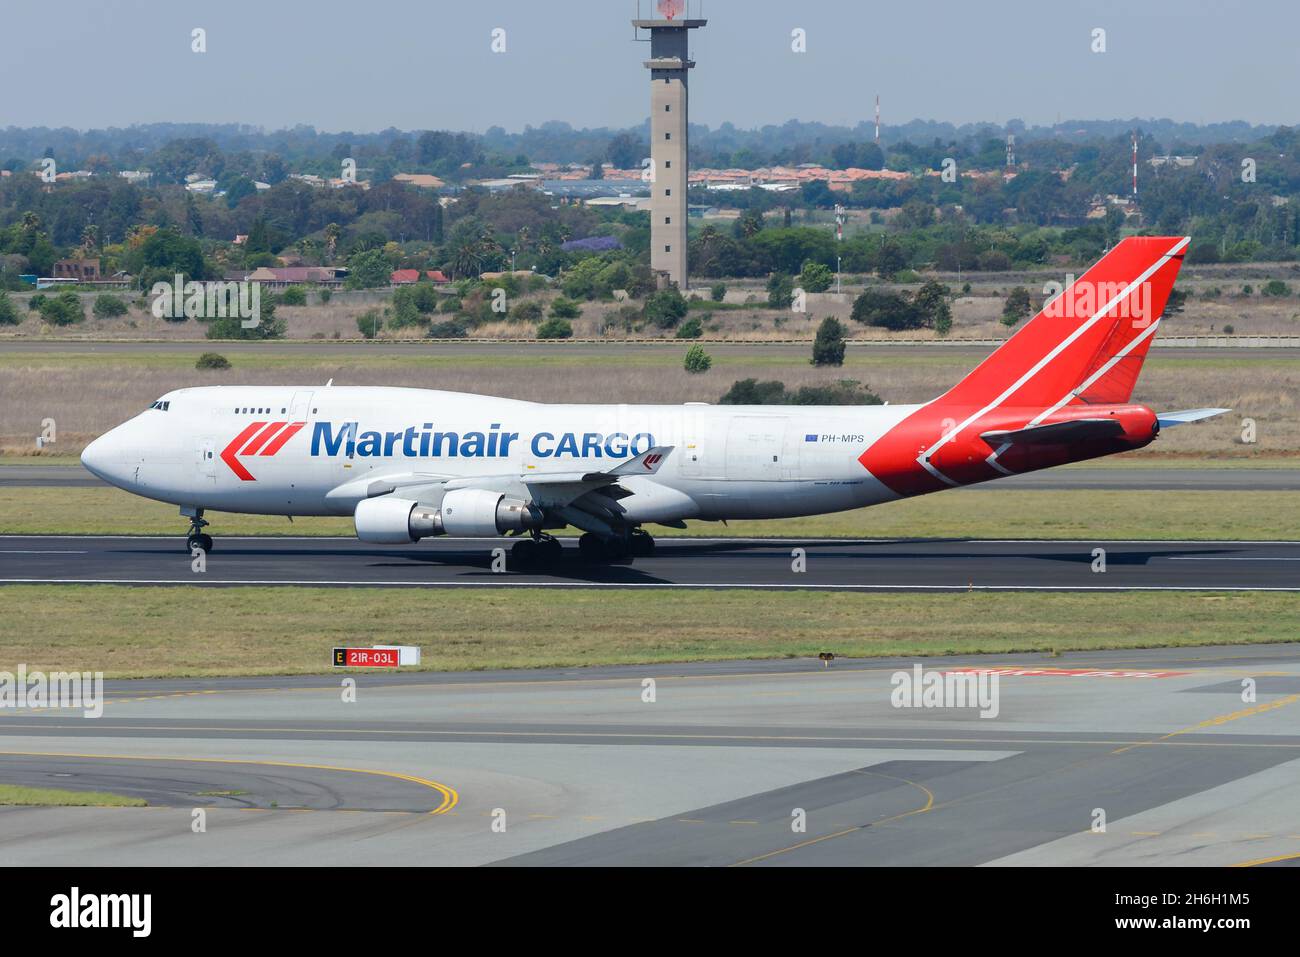 Martinair Cargo Boeing 747 Freighter departing South Africa. Cargo plane 747-400F. Martinair Cargo is a dutch cargo airline. Stock Photo